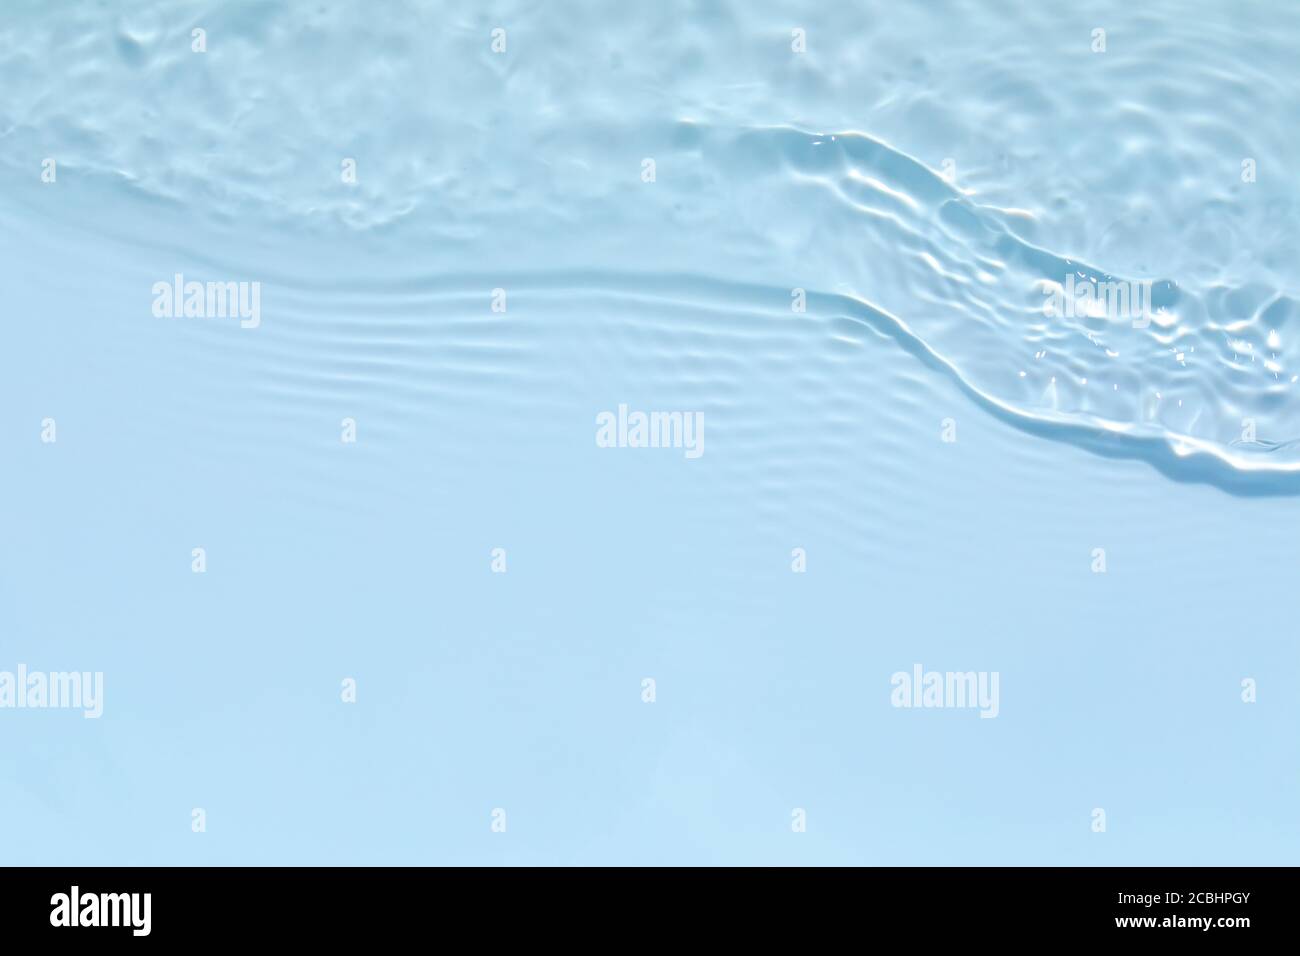 azul transparente color agua clara calma textura de la superficie Foto de stock